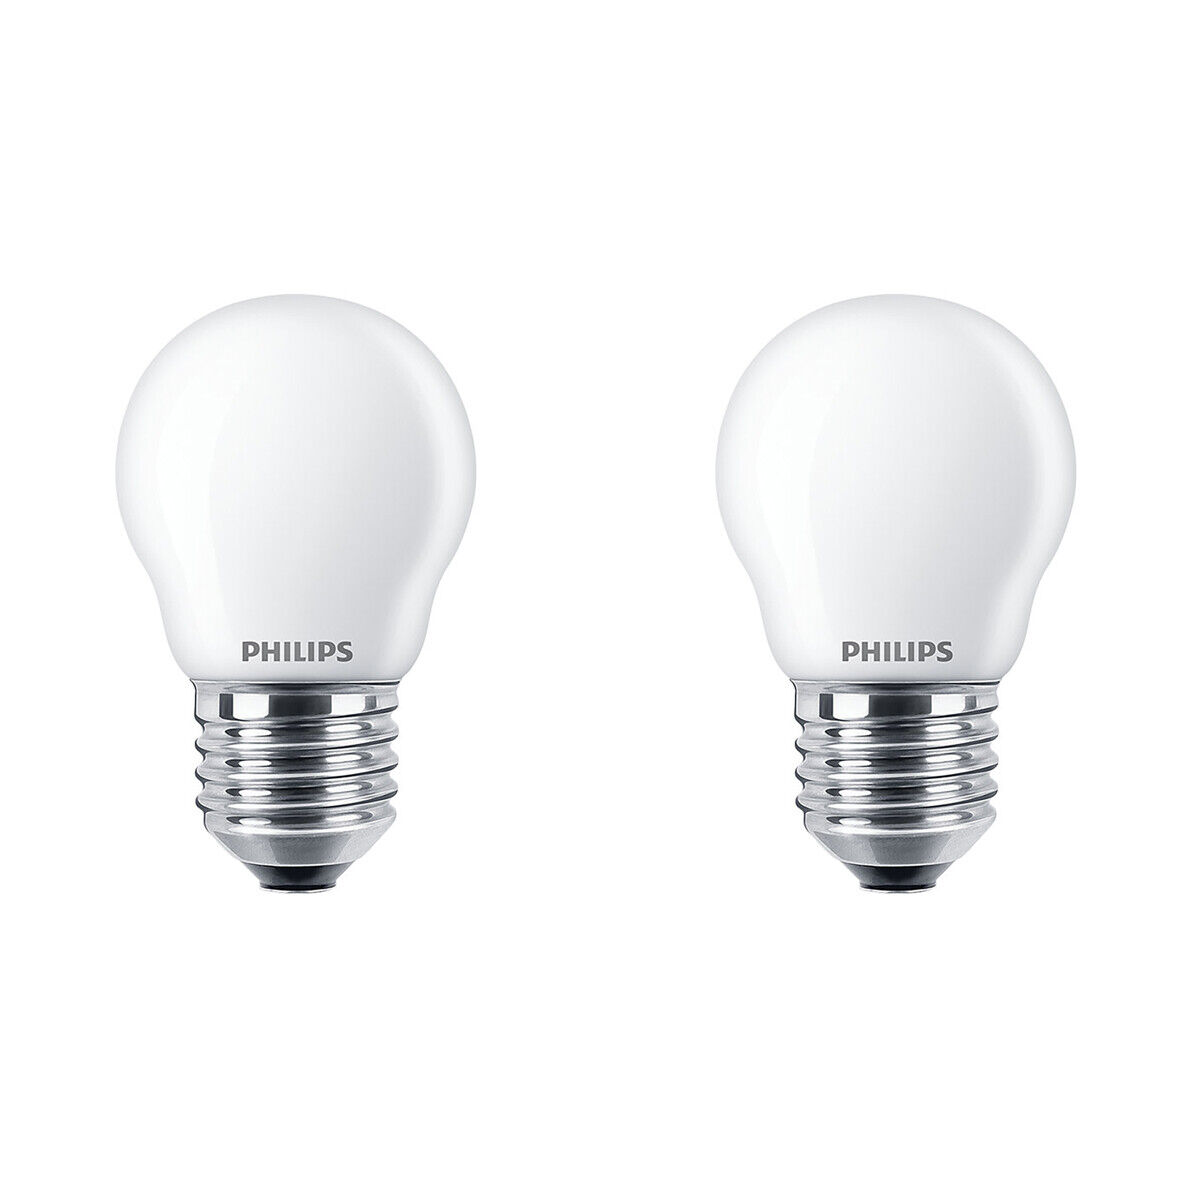 PHILIPS - LED Lamp - Set 2 Stuks - Classic Lustre 827 P45 FR - E27 Fitting - 4.3W - Warm Wit 2700K   Vervangt 40W